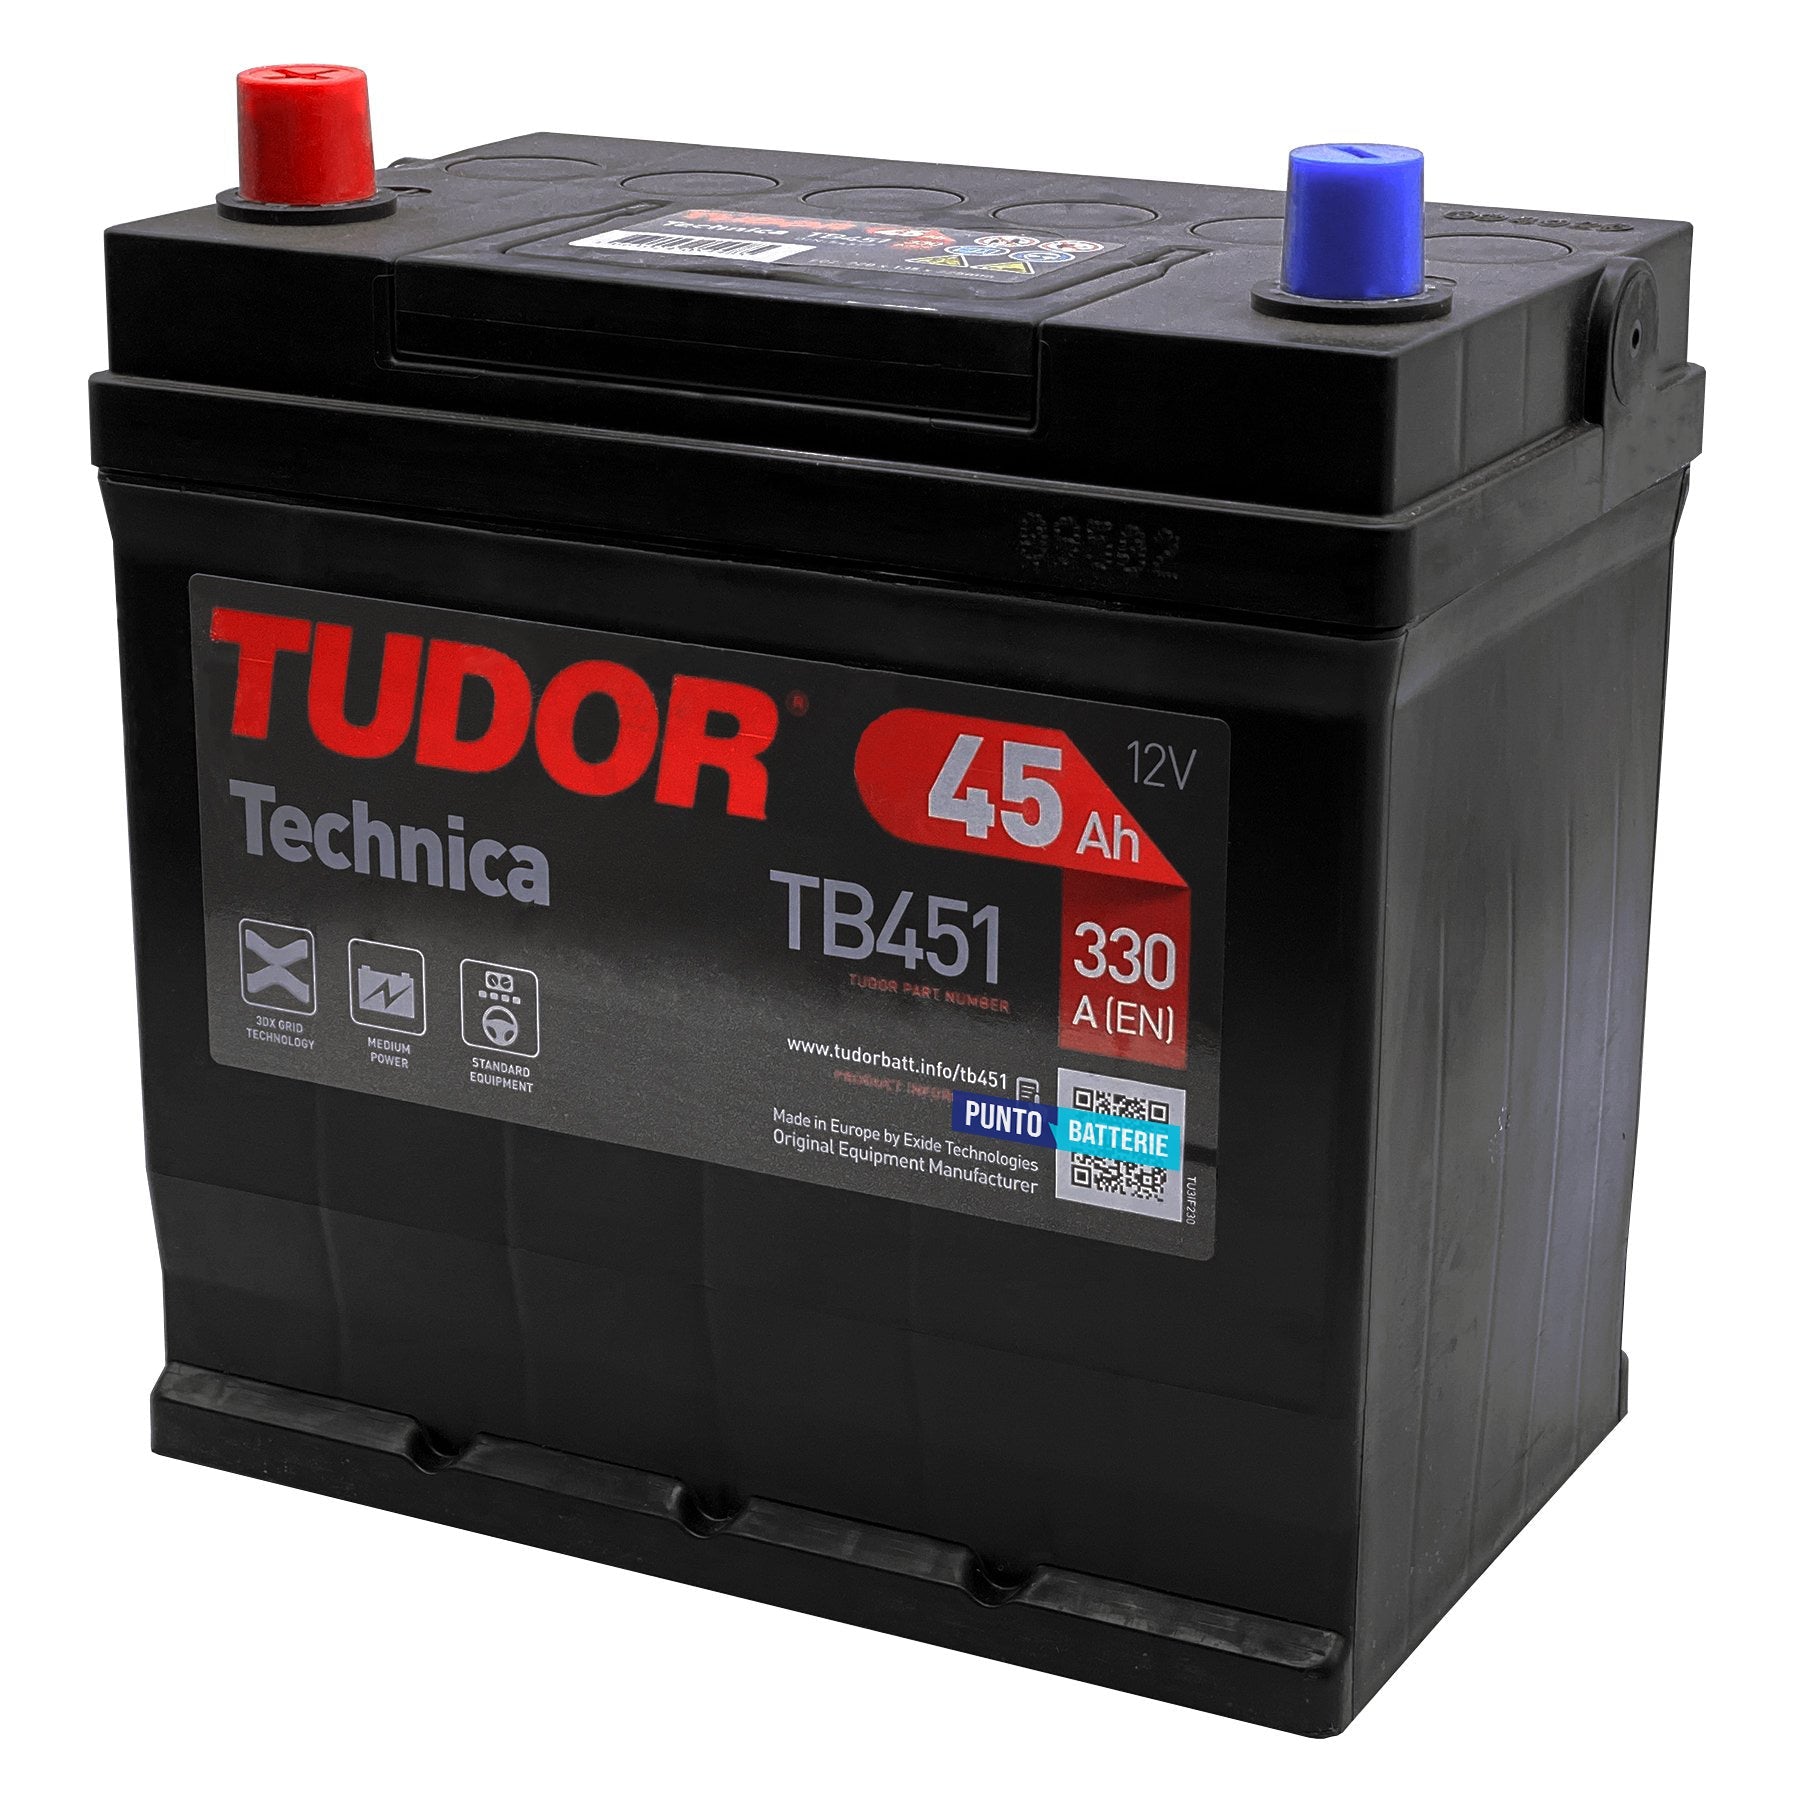 Batteria Tudor TB451 - Technica (12V, 45Ah, 330A) - Puntobatterie